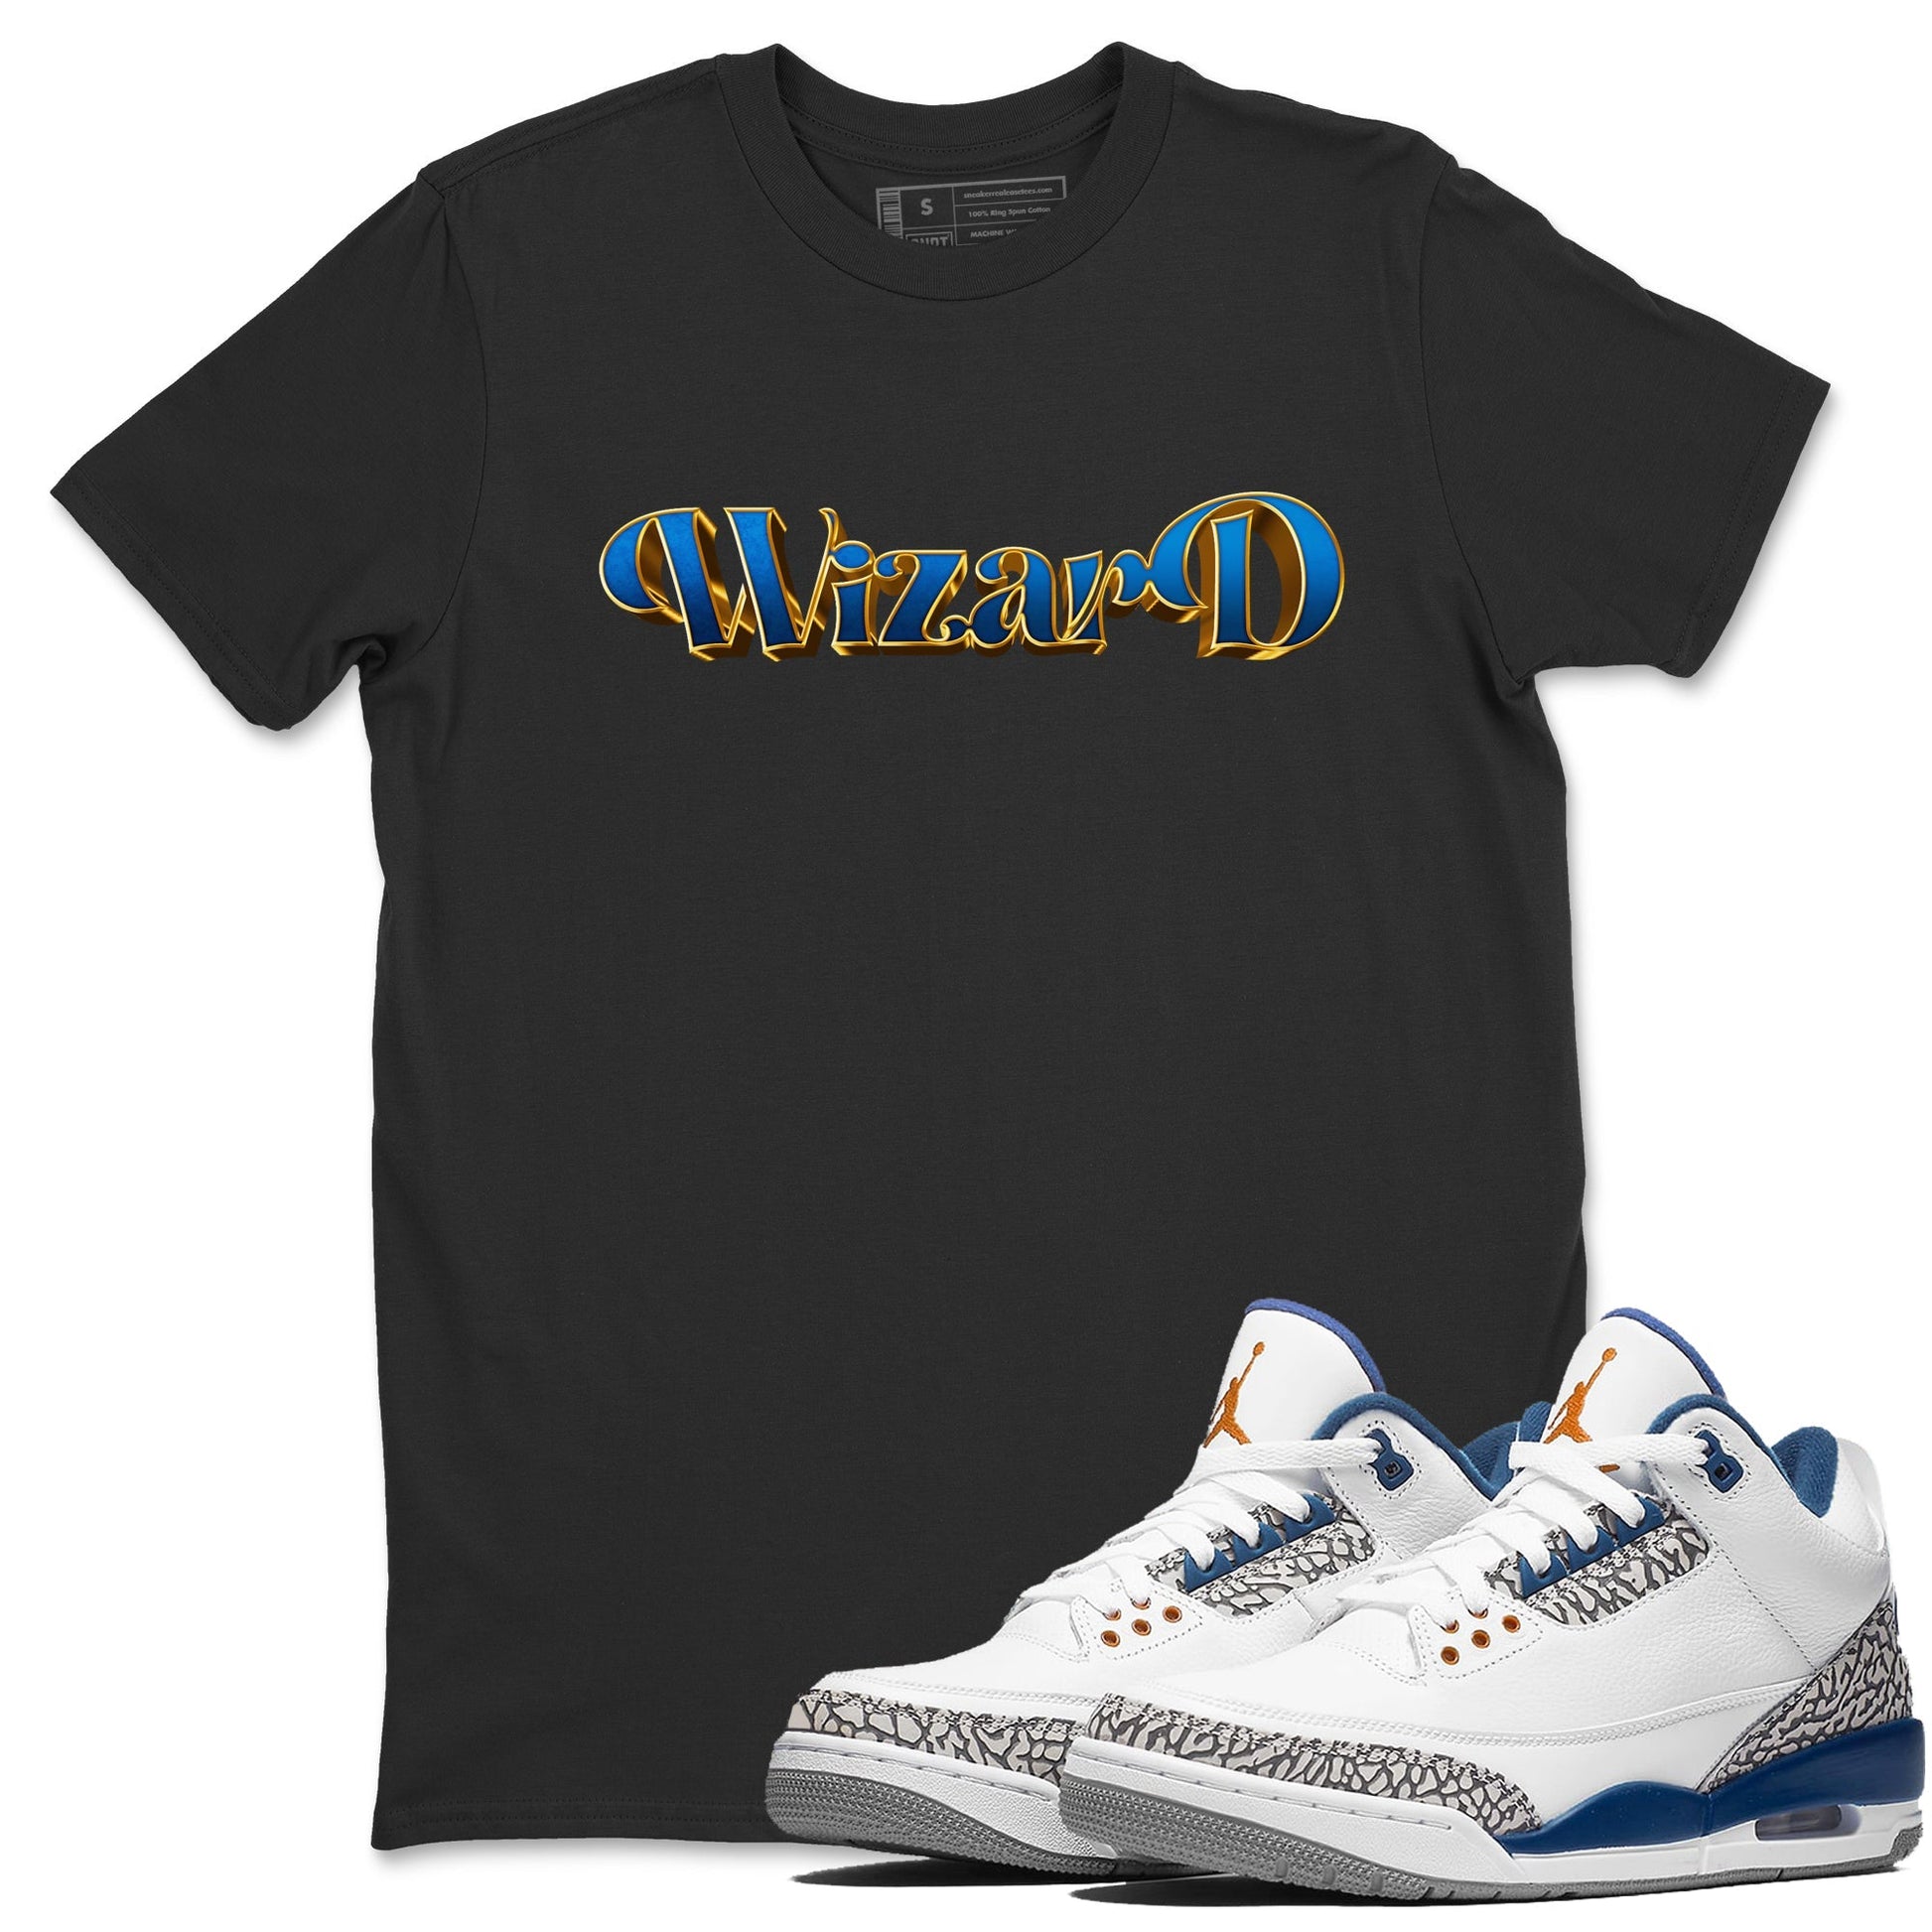 Air Jordan 3 Wizards, Antique Typo Unisex Shirts